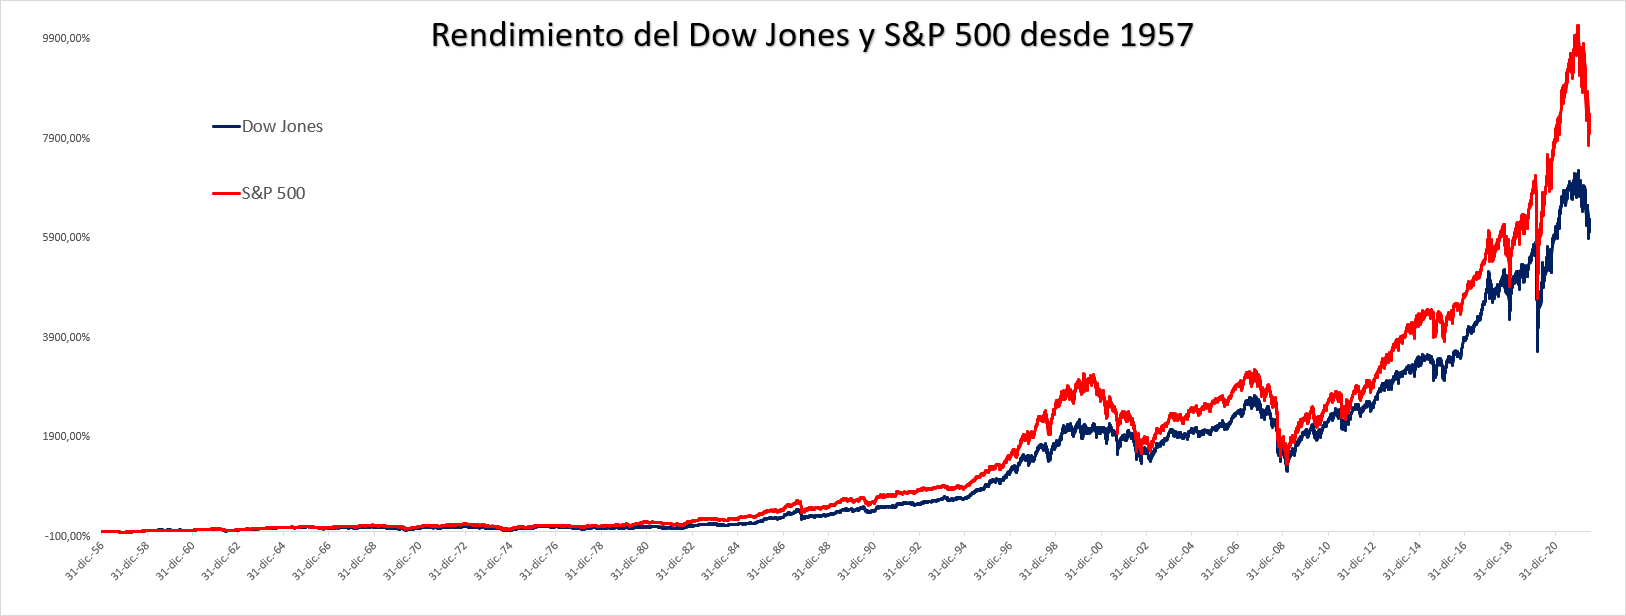 Dow Jones y S&P 500 desde 1957